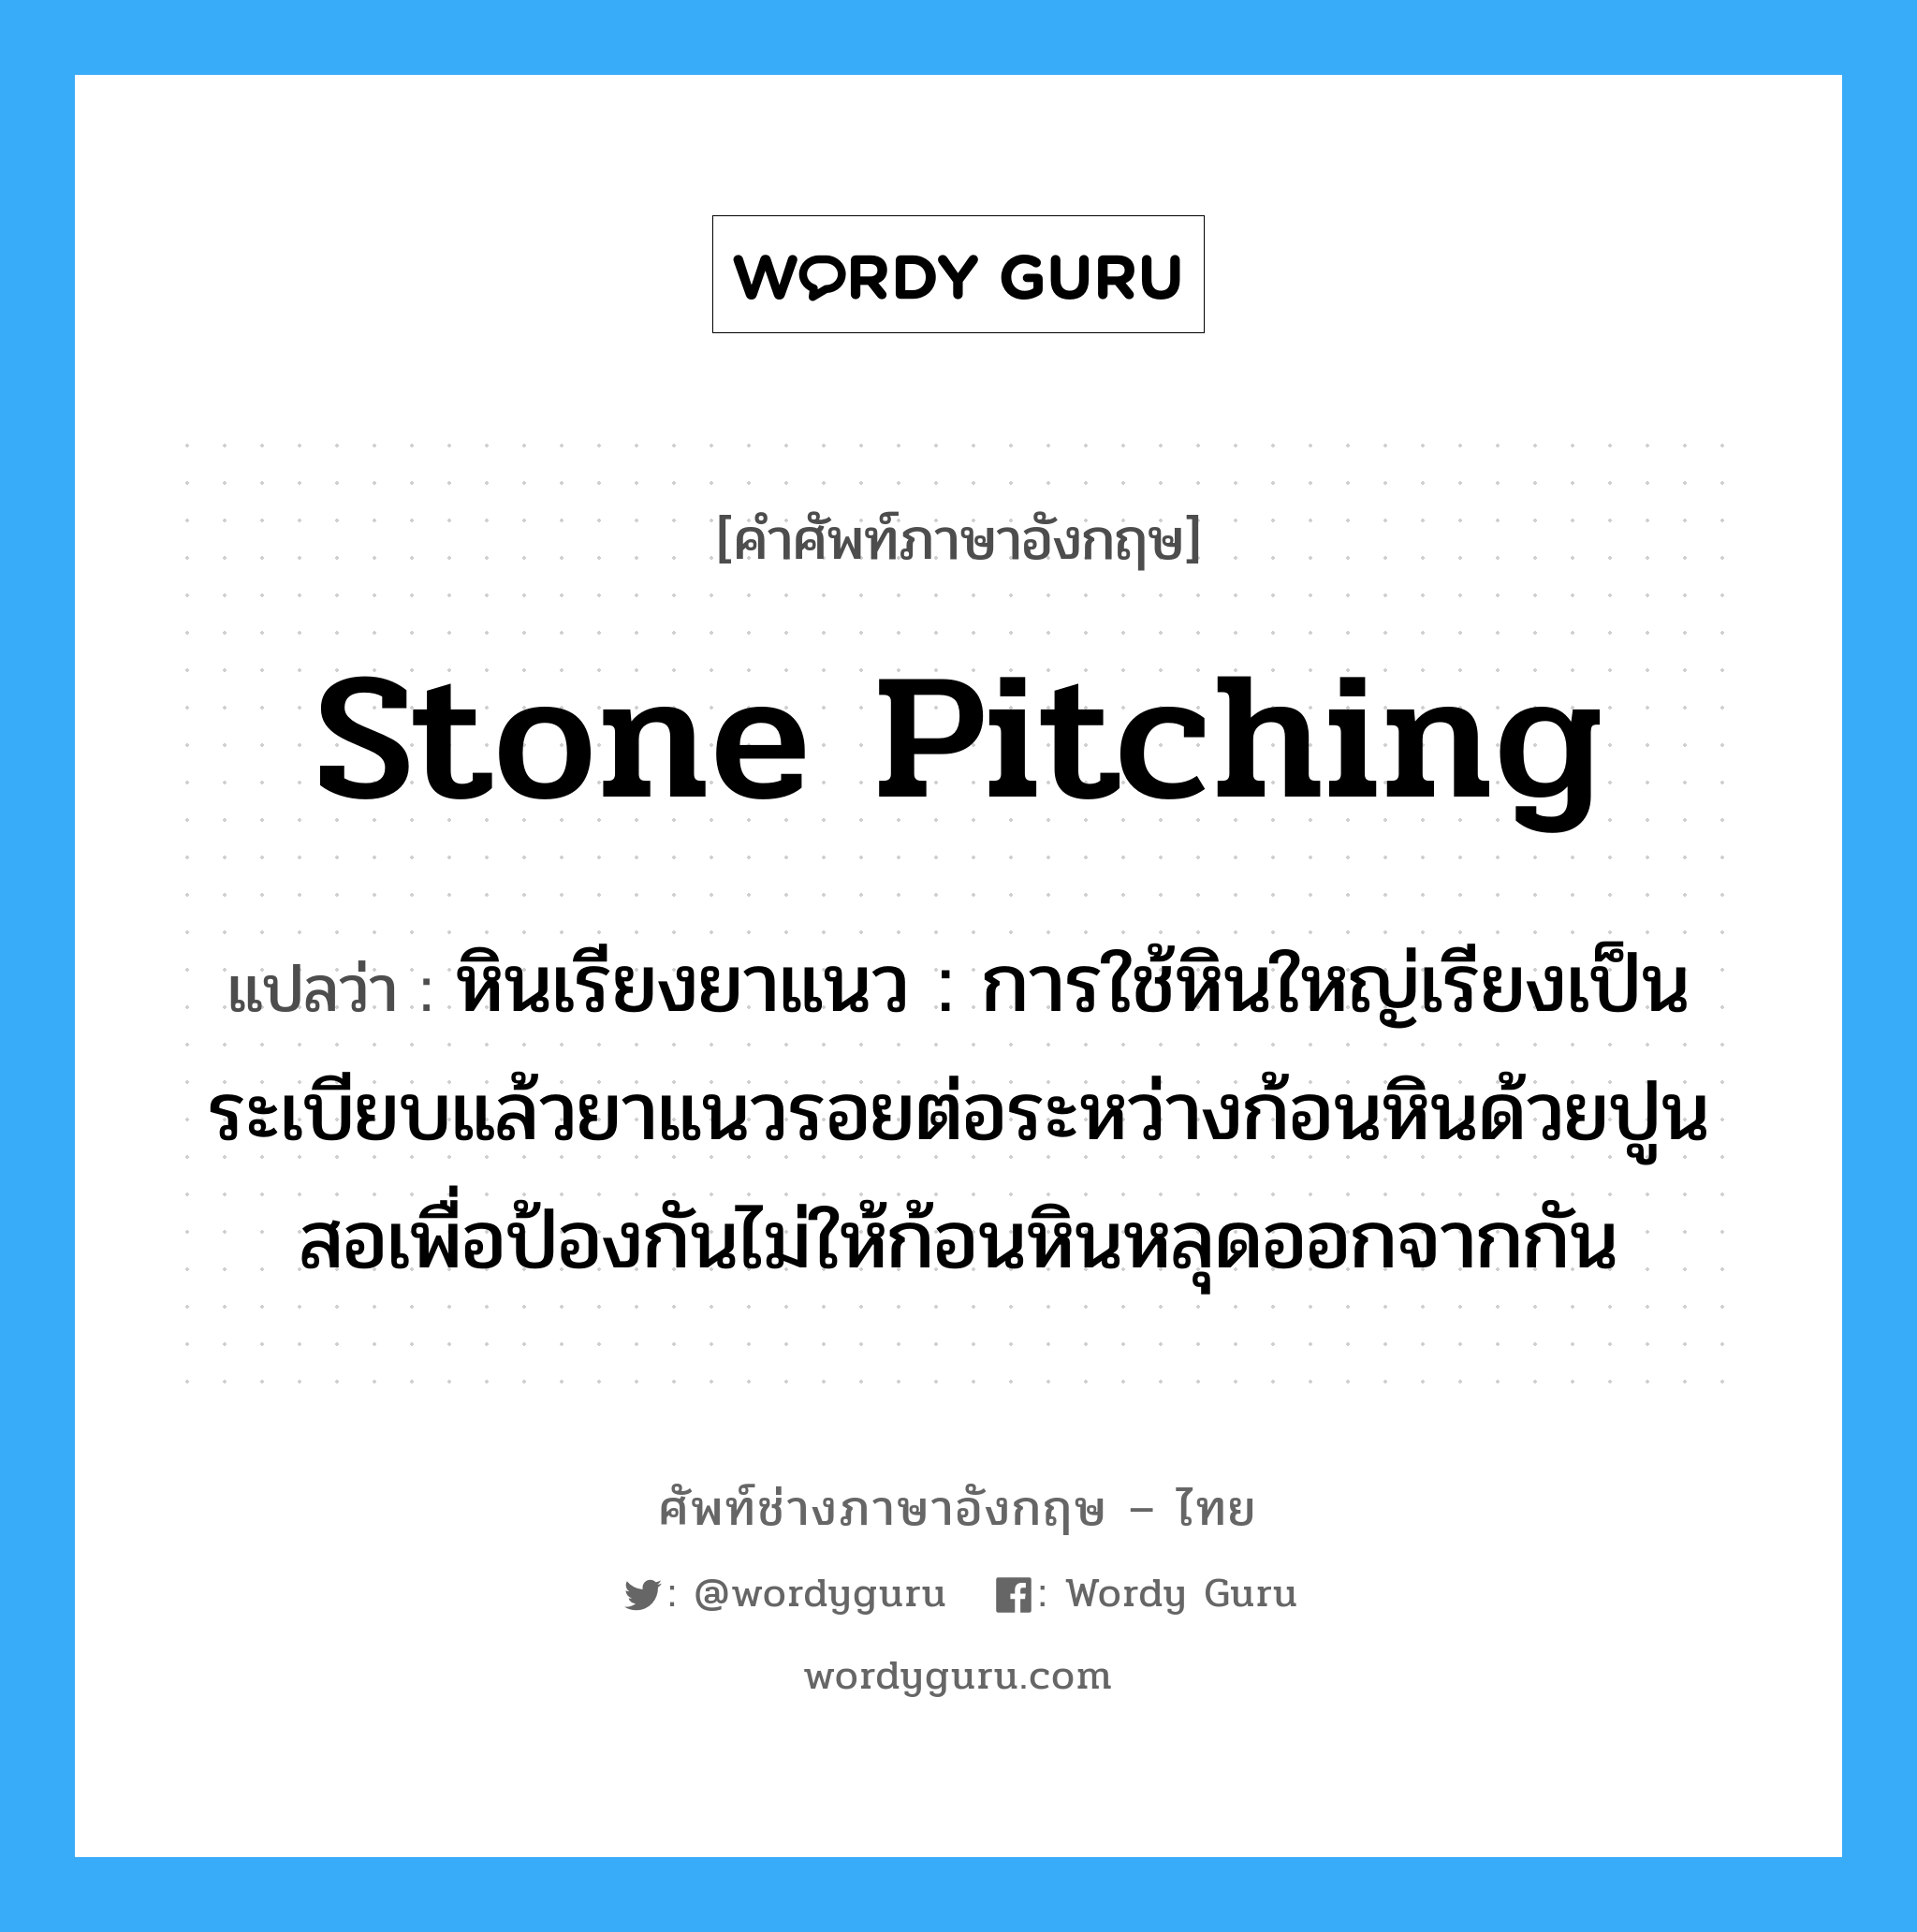 stone pitching แปลว่า?, คำศัพท์ช่างภาษาอังกฤษ - ไทย stone pitching คำศัพท์ภาษาอังกฤษ stone pitching แปลว่า หินเรียงยาแนว : การใช้หินใหญ่เรียงเป็นระเบียบแล้วยาแนวรอยต่อระหว่างก้อนหินด้วยปูนสอเพื่อป้องกันไม่ให้ก้อนหินหลุดออกจากกัน